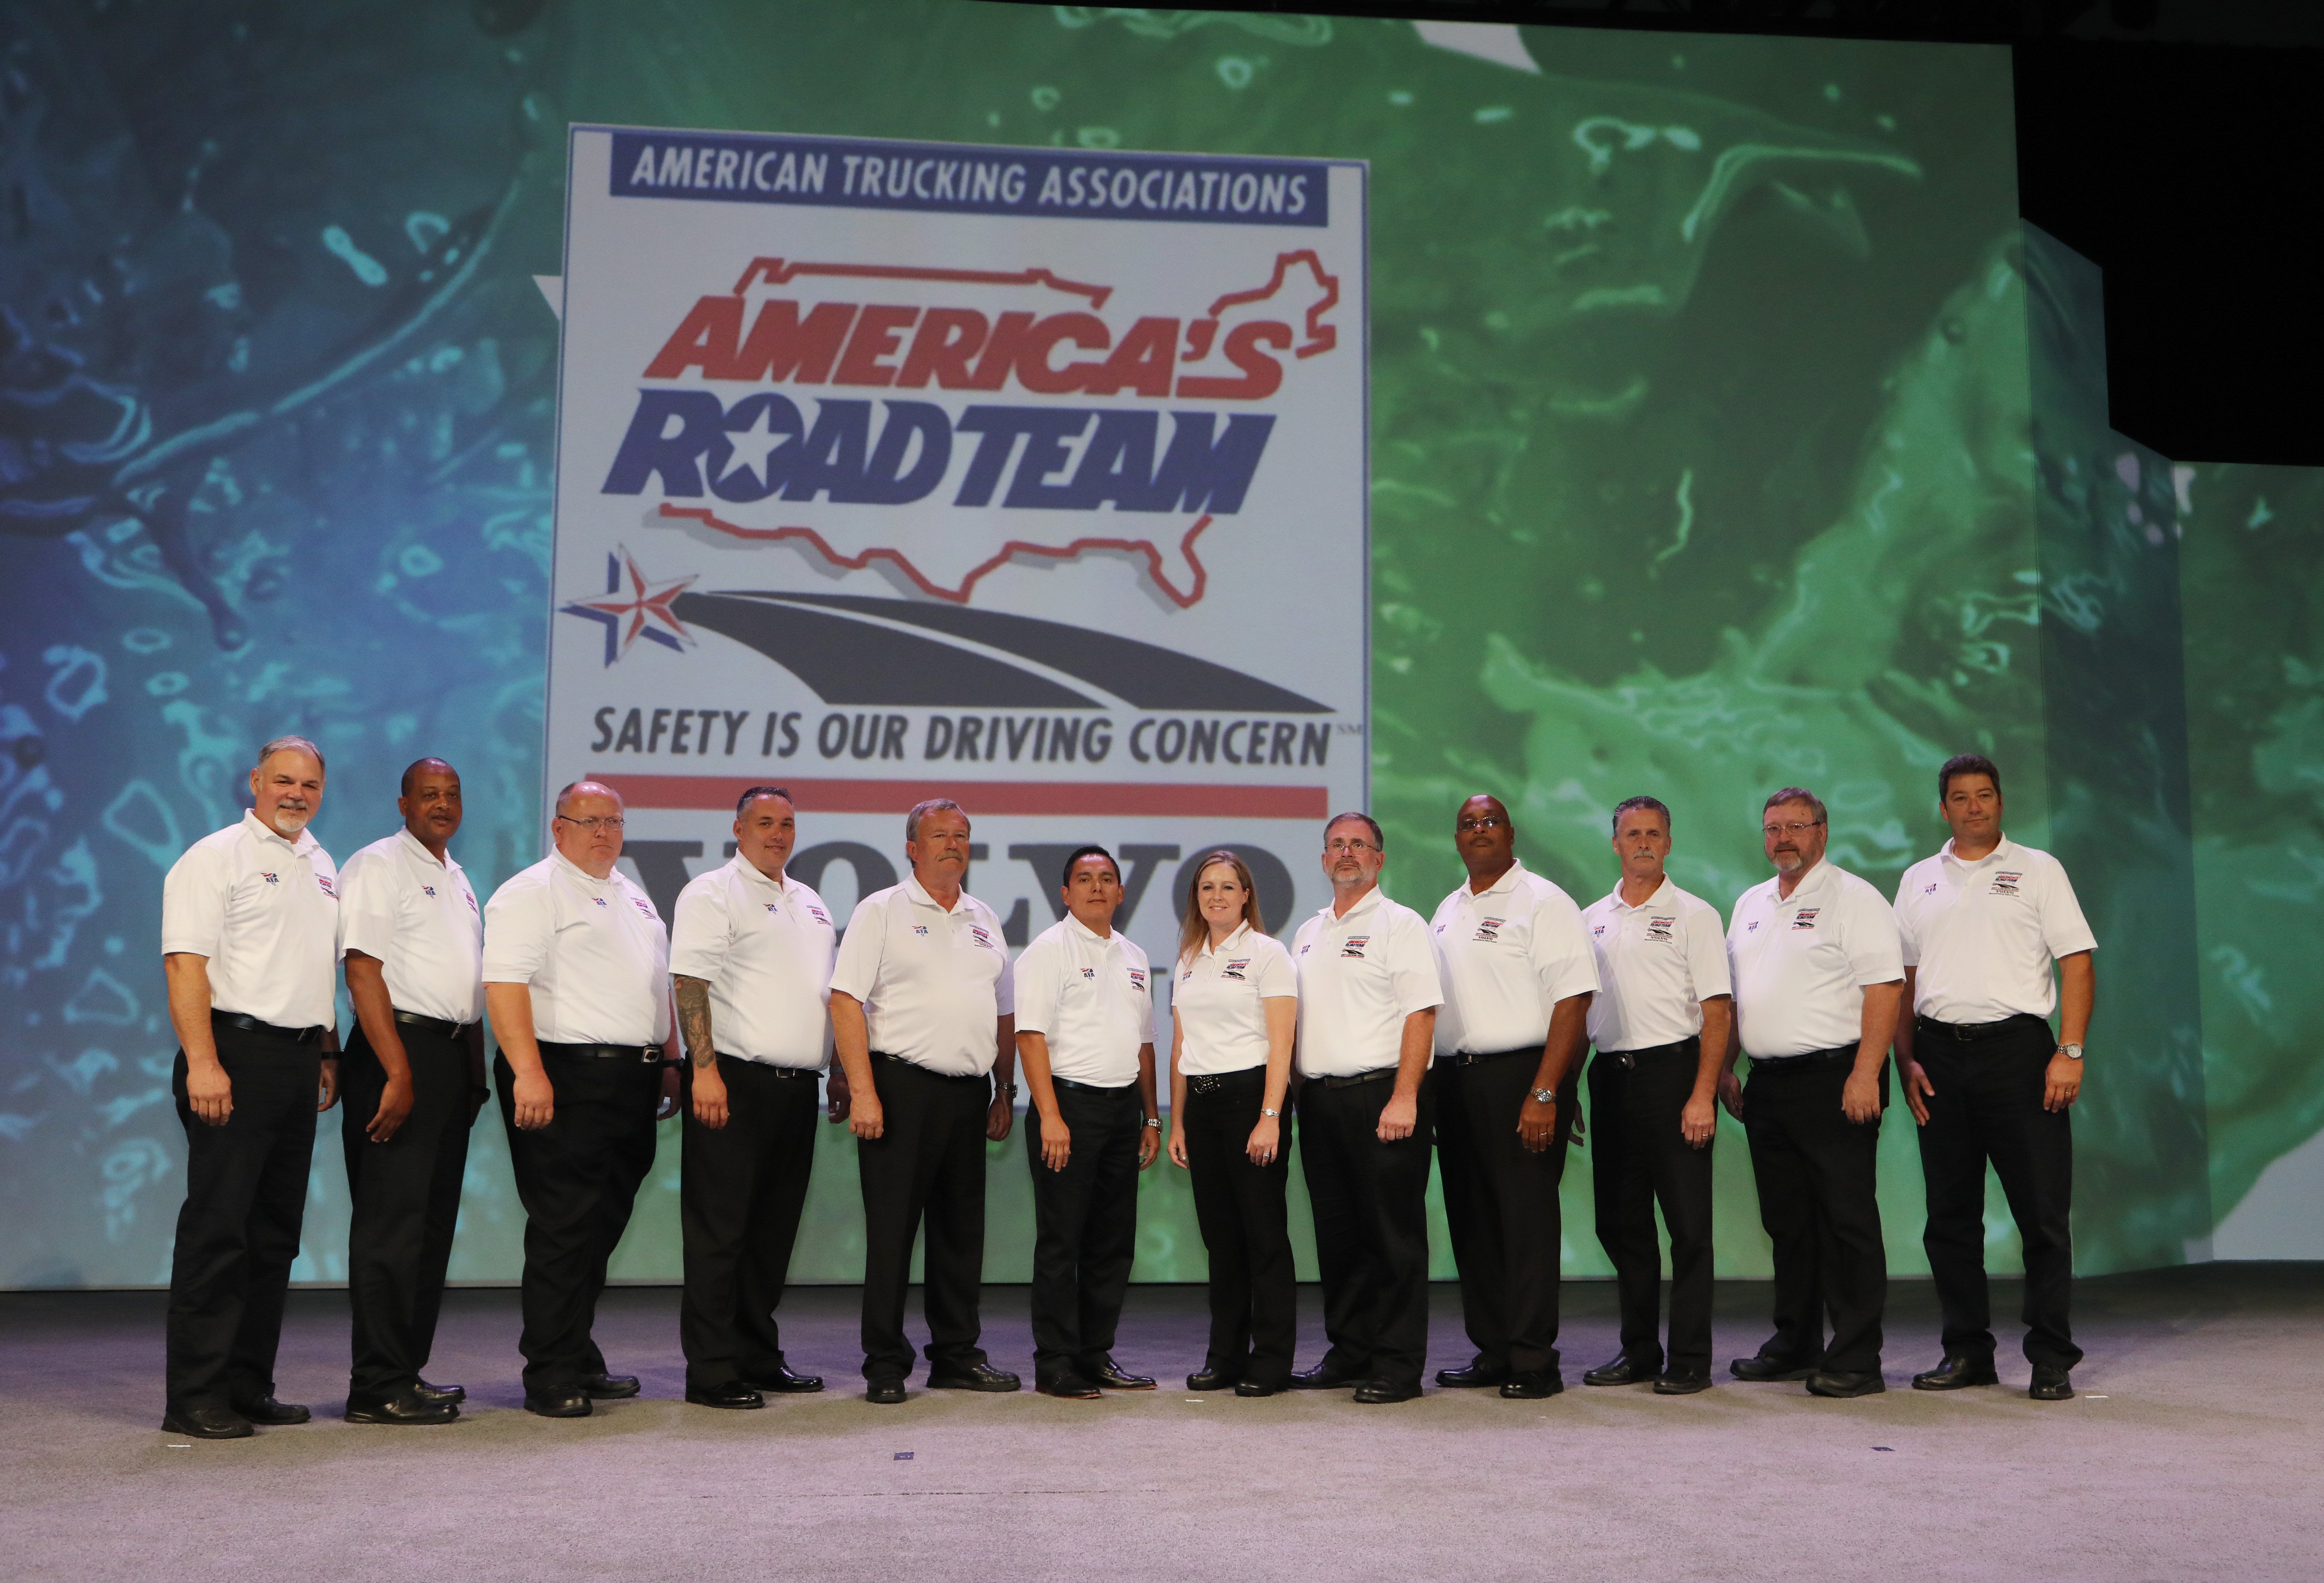 America's Road Team at MCE